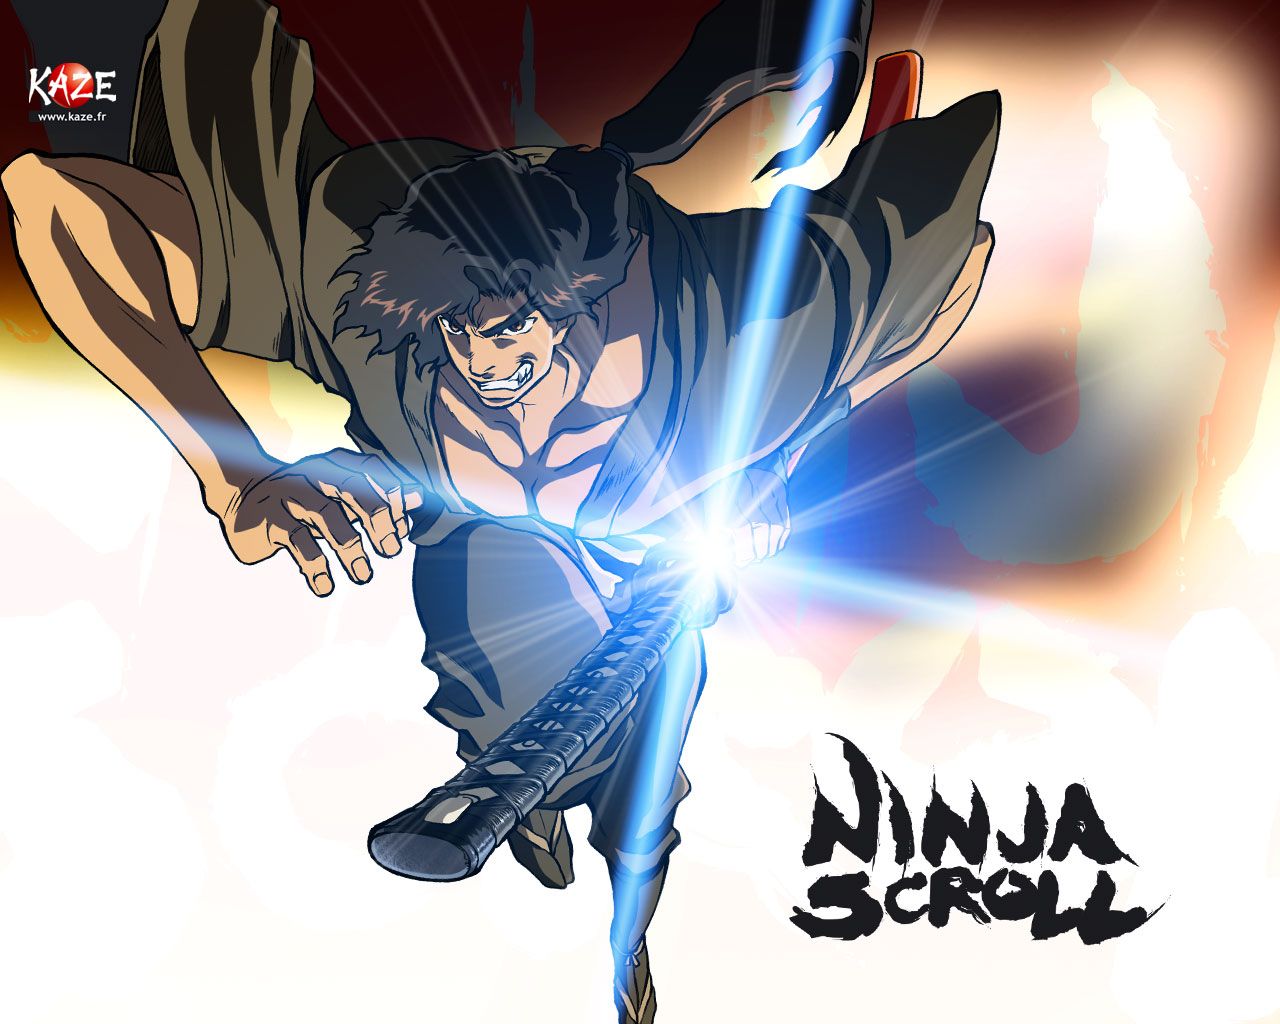 Ninja-Scroll-Wallpaper-3.jpg